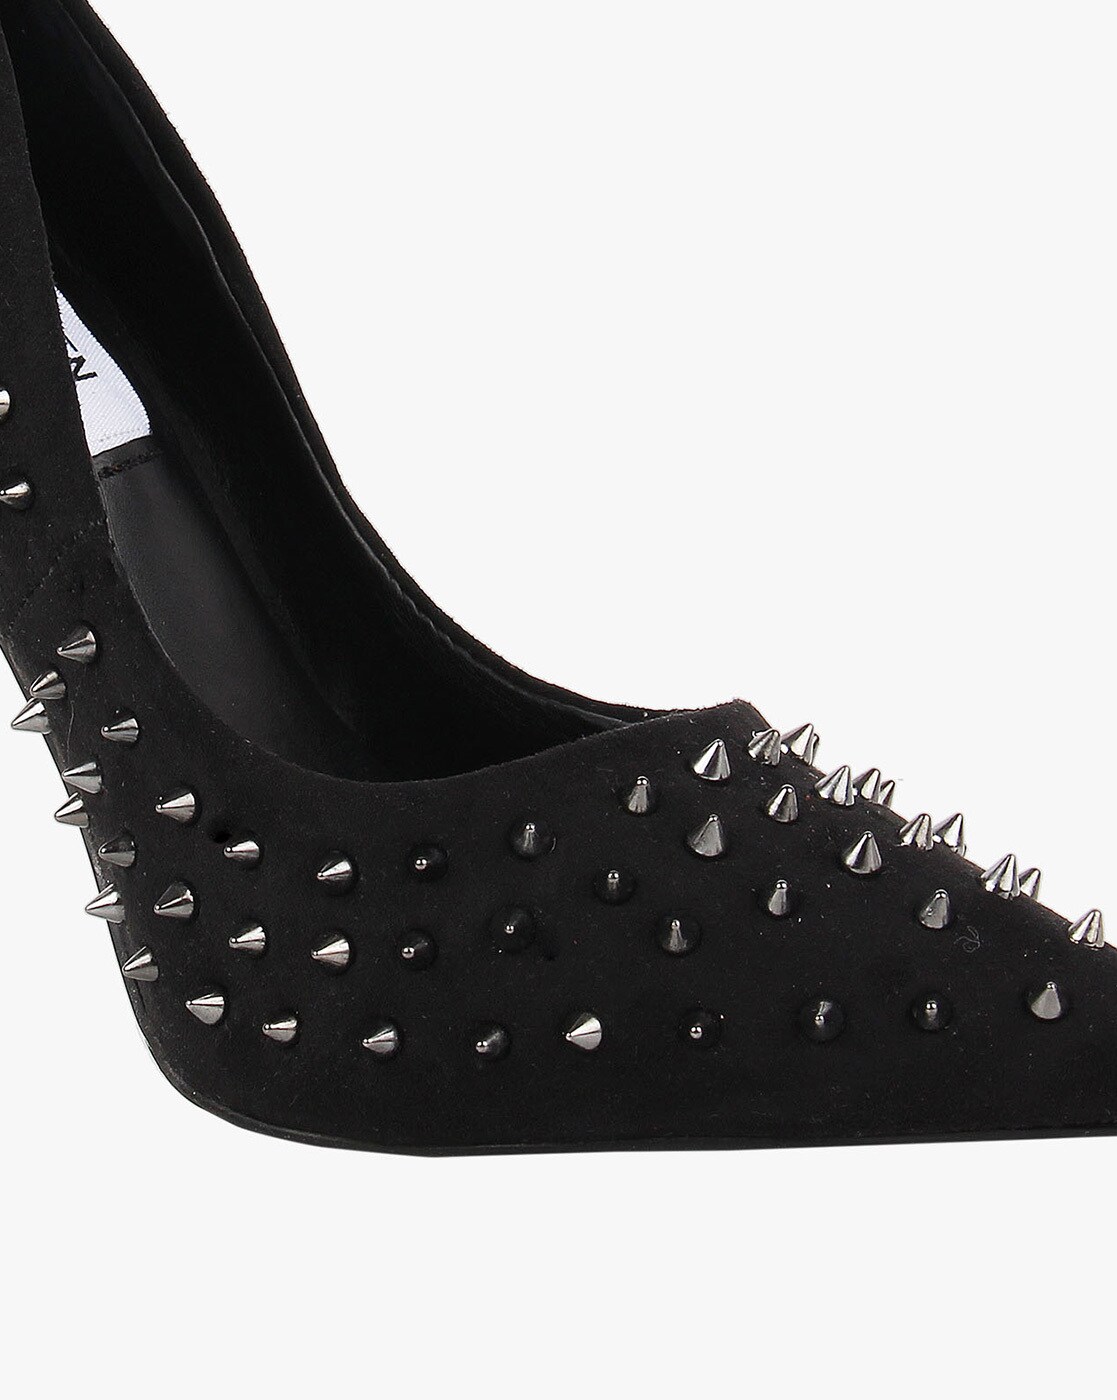 Women's Ankle Strap High Heels Rivet Studded Pointed Toe Pumps Stilettos  Shoes | eBay